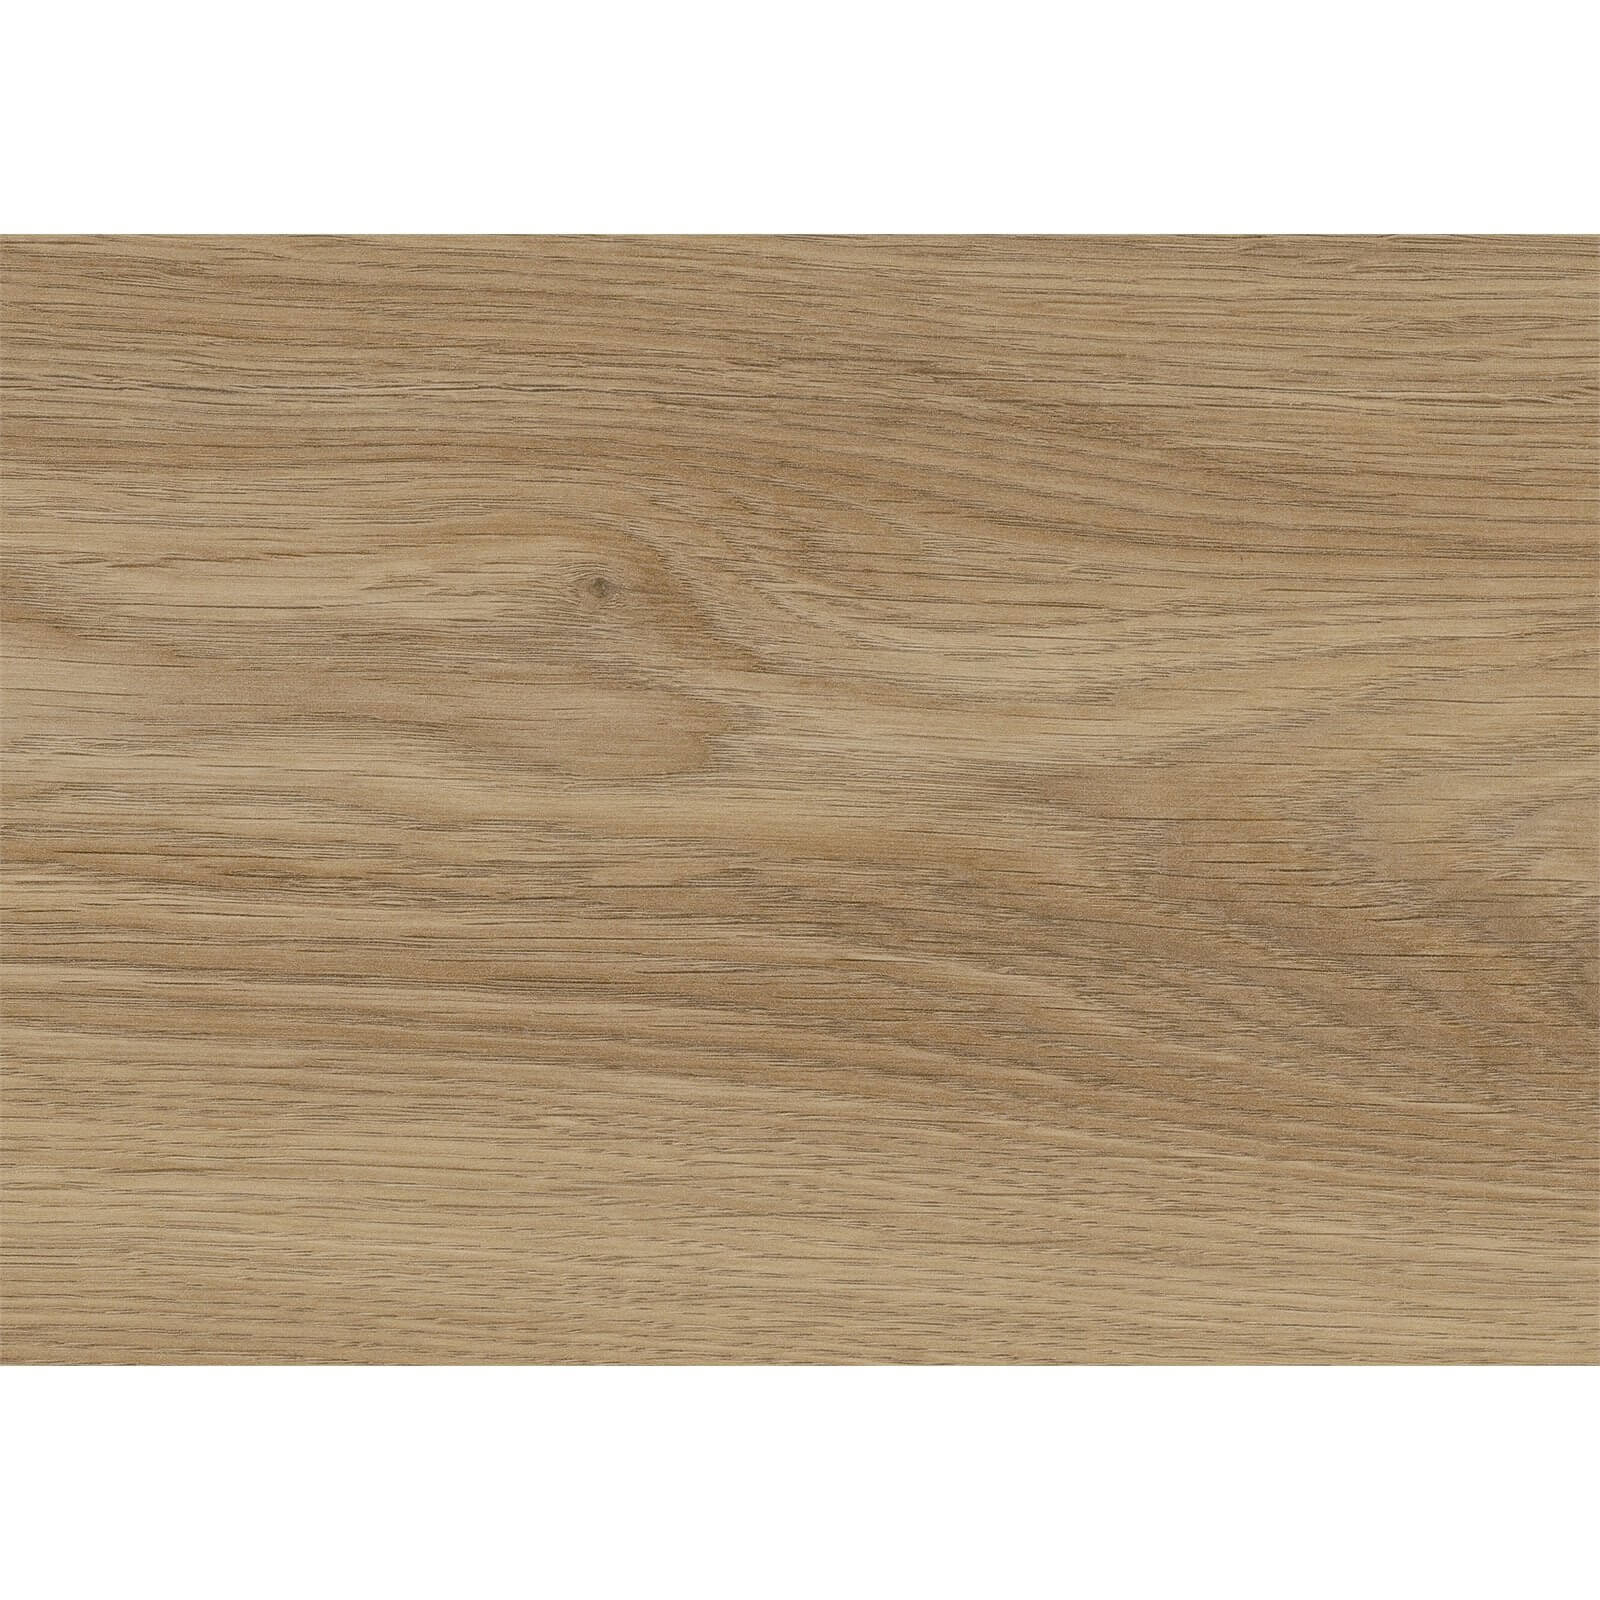 Historic Oak Laminate Flooring Sample Board